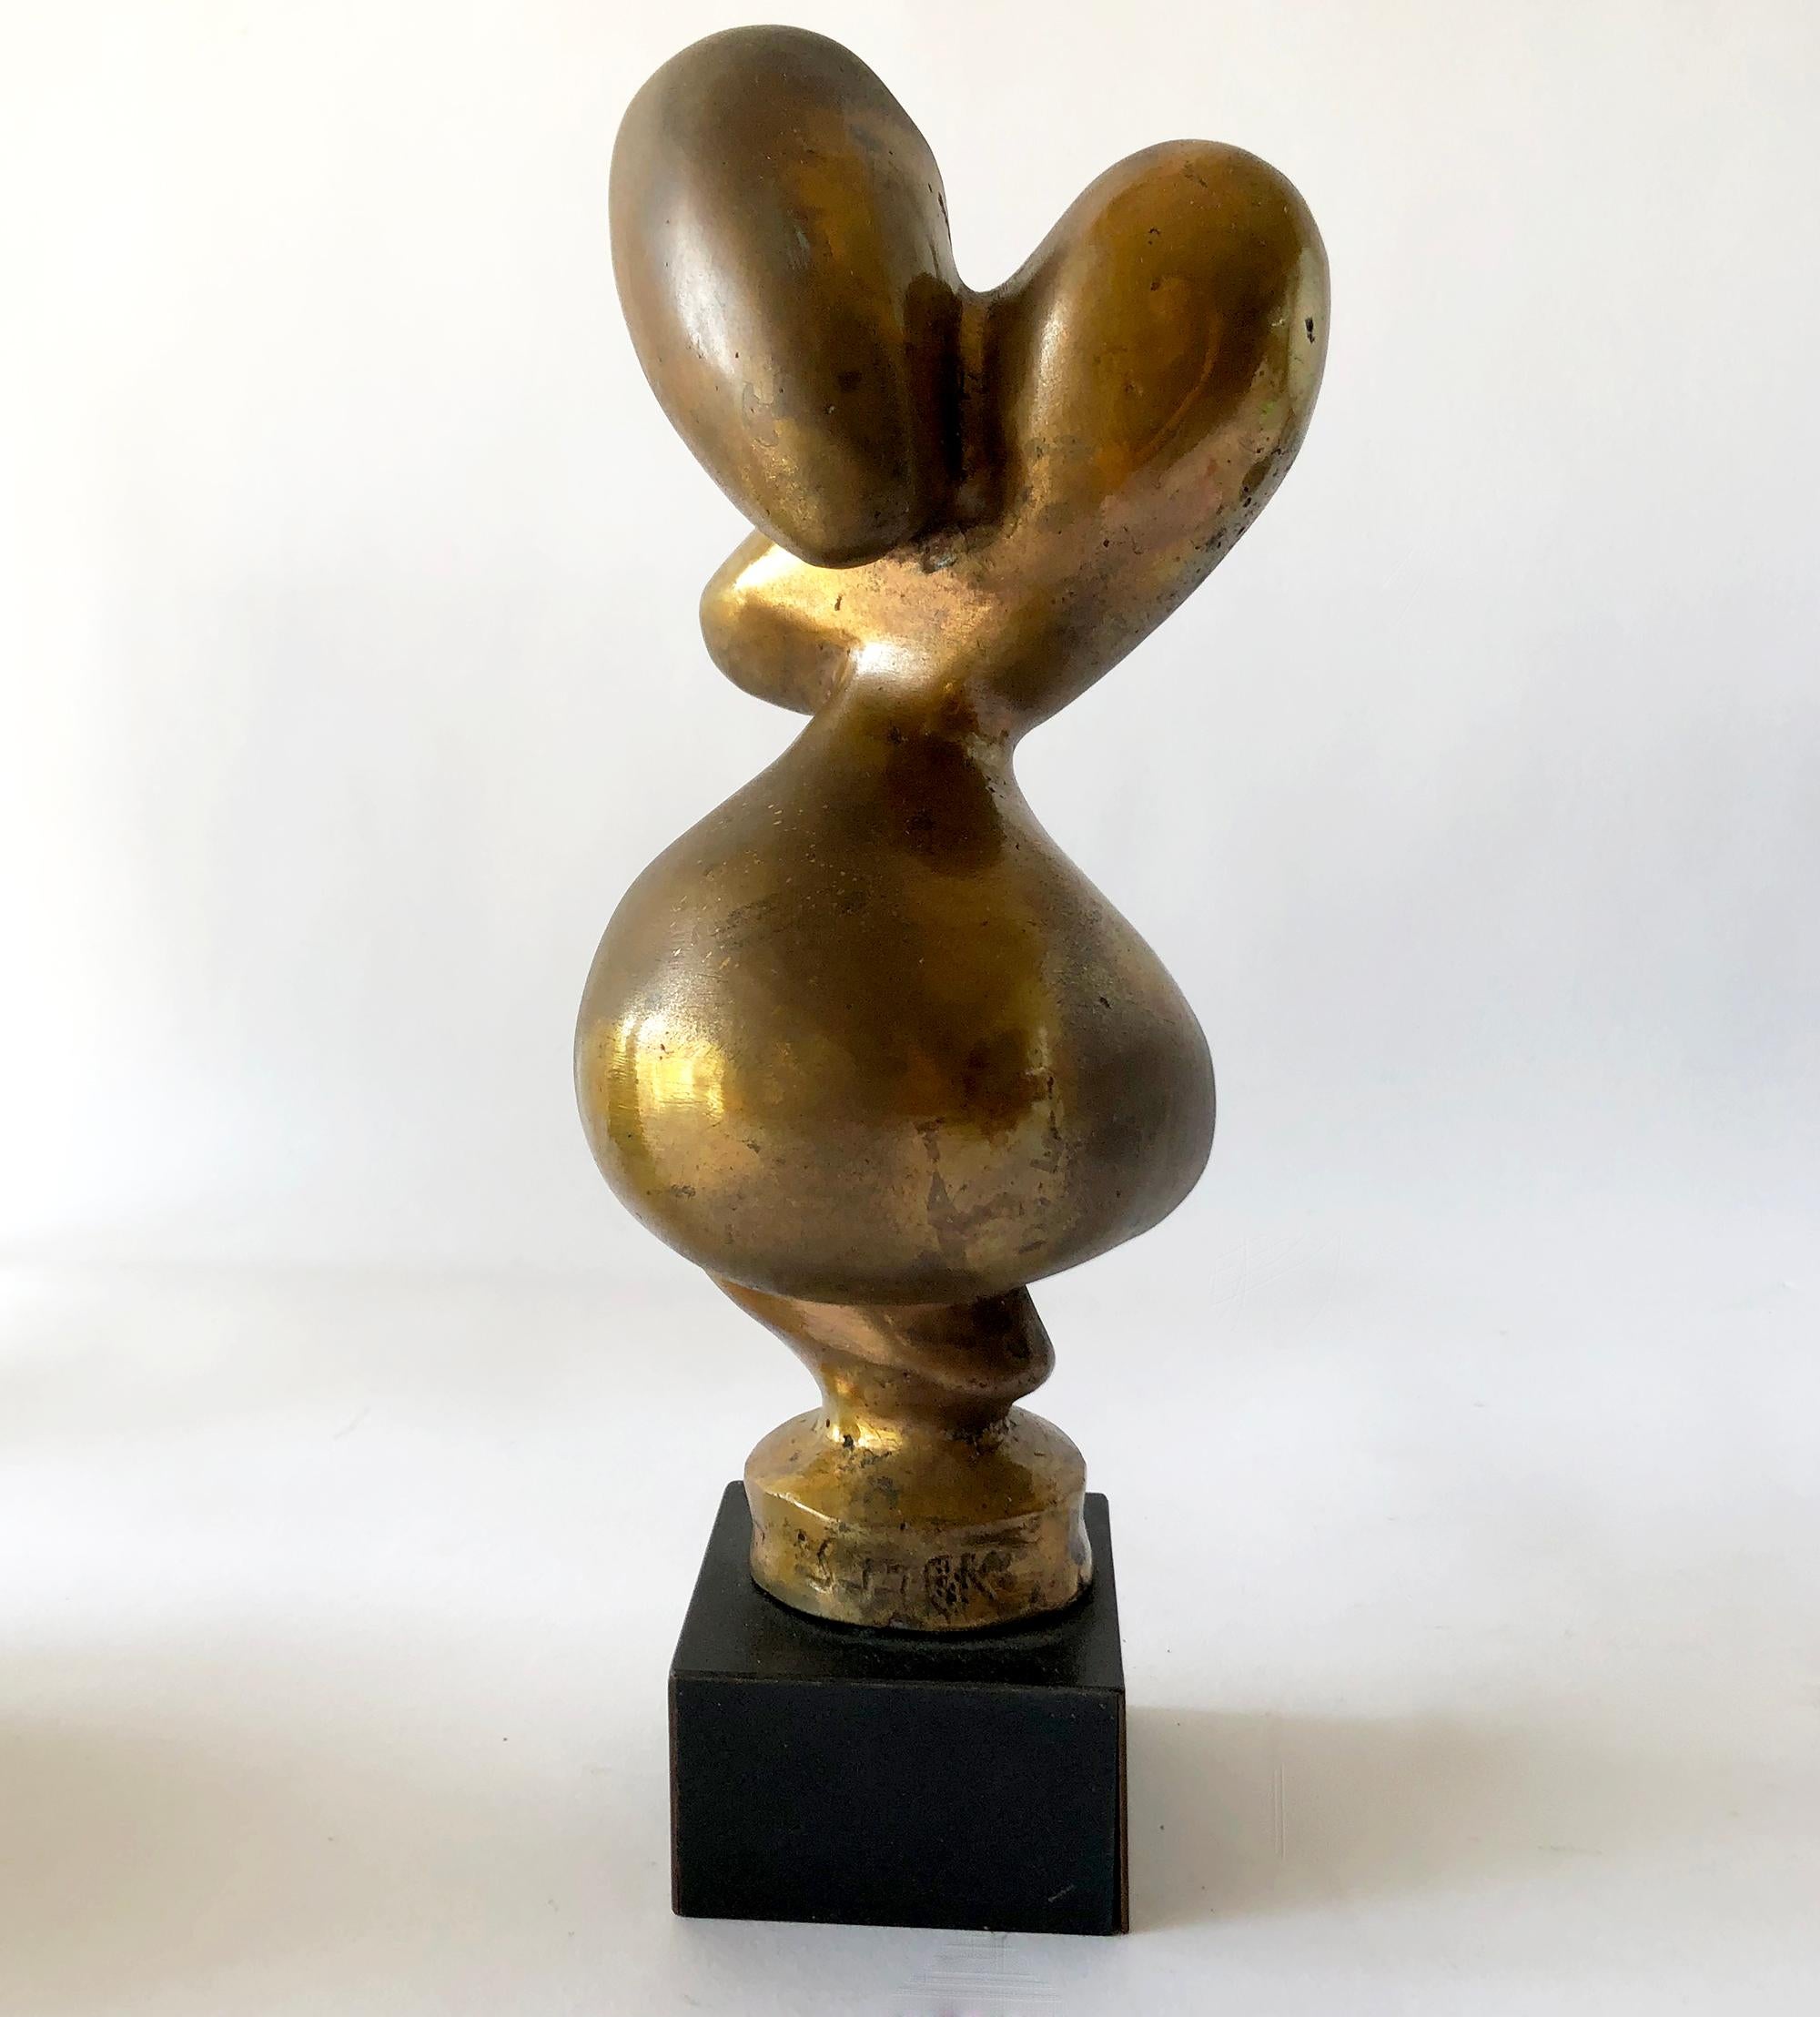 Abstract modern figurative hollow bronze sculpture, circa 1950s or 1960s. Sculpture measures 10.25